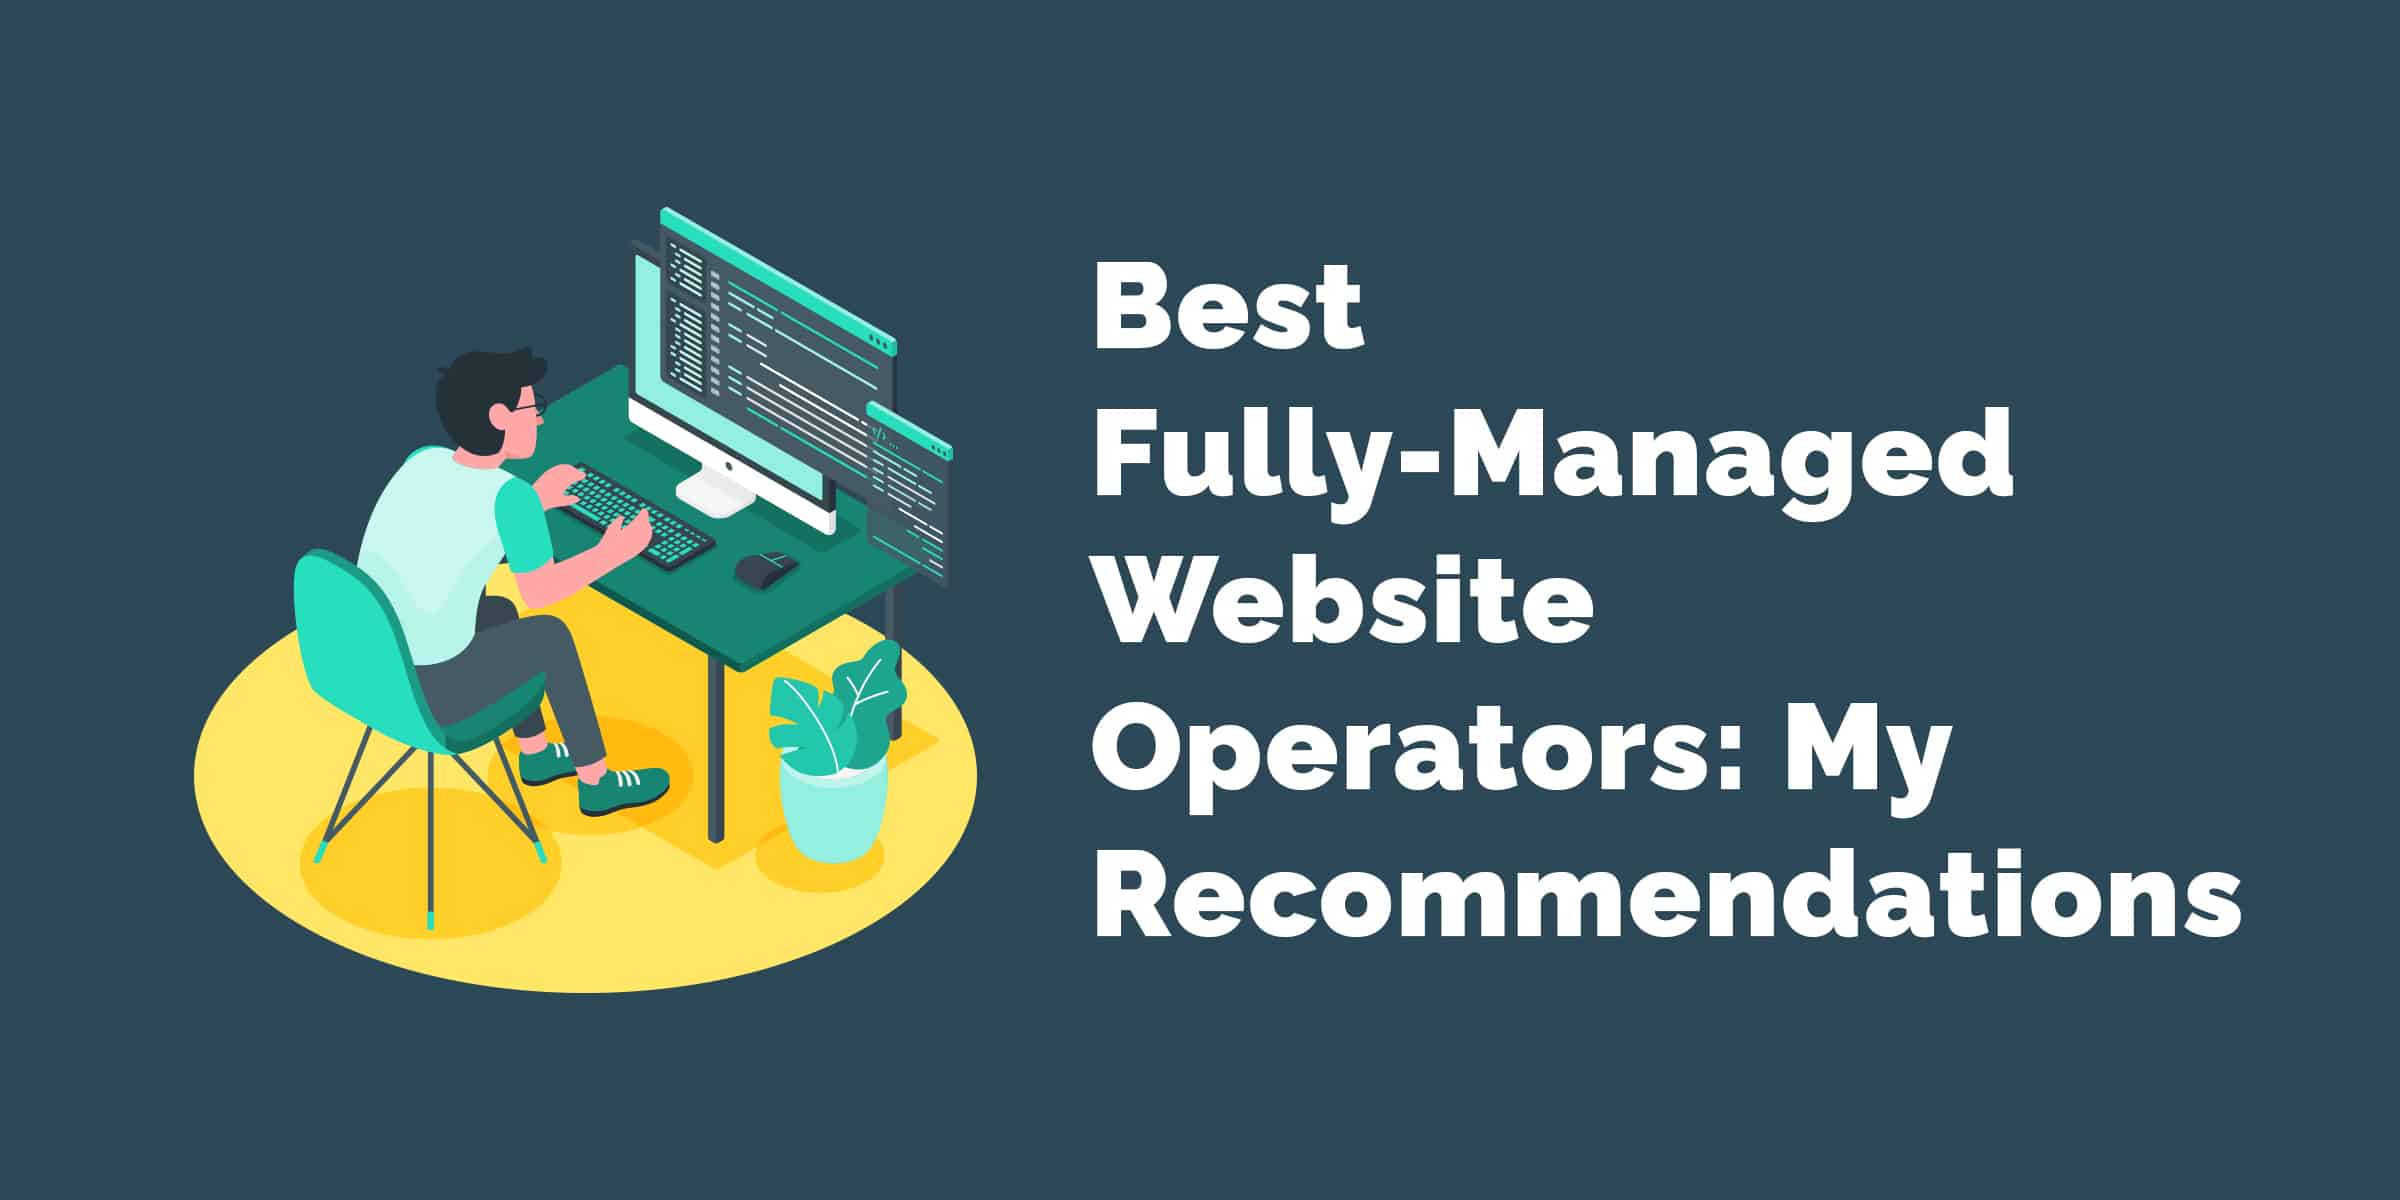 Fully-Managed Website Operators